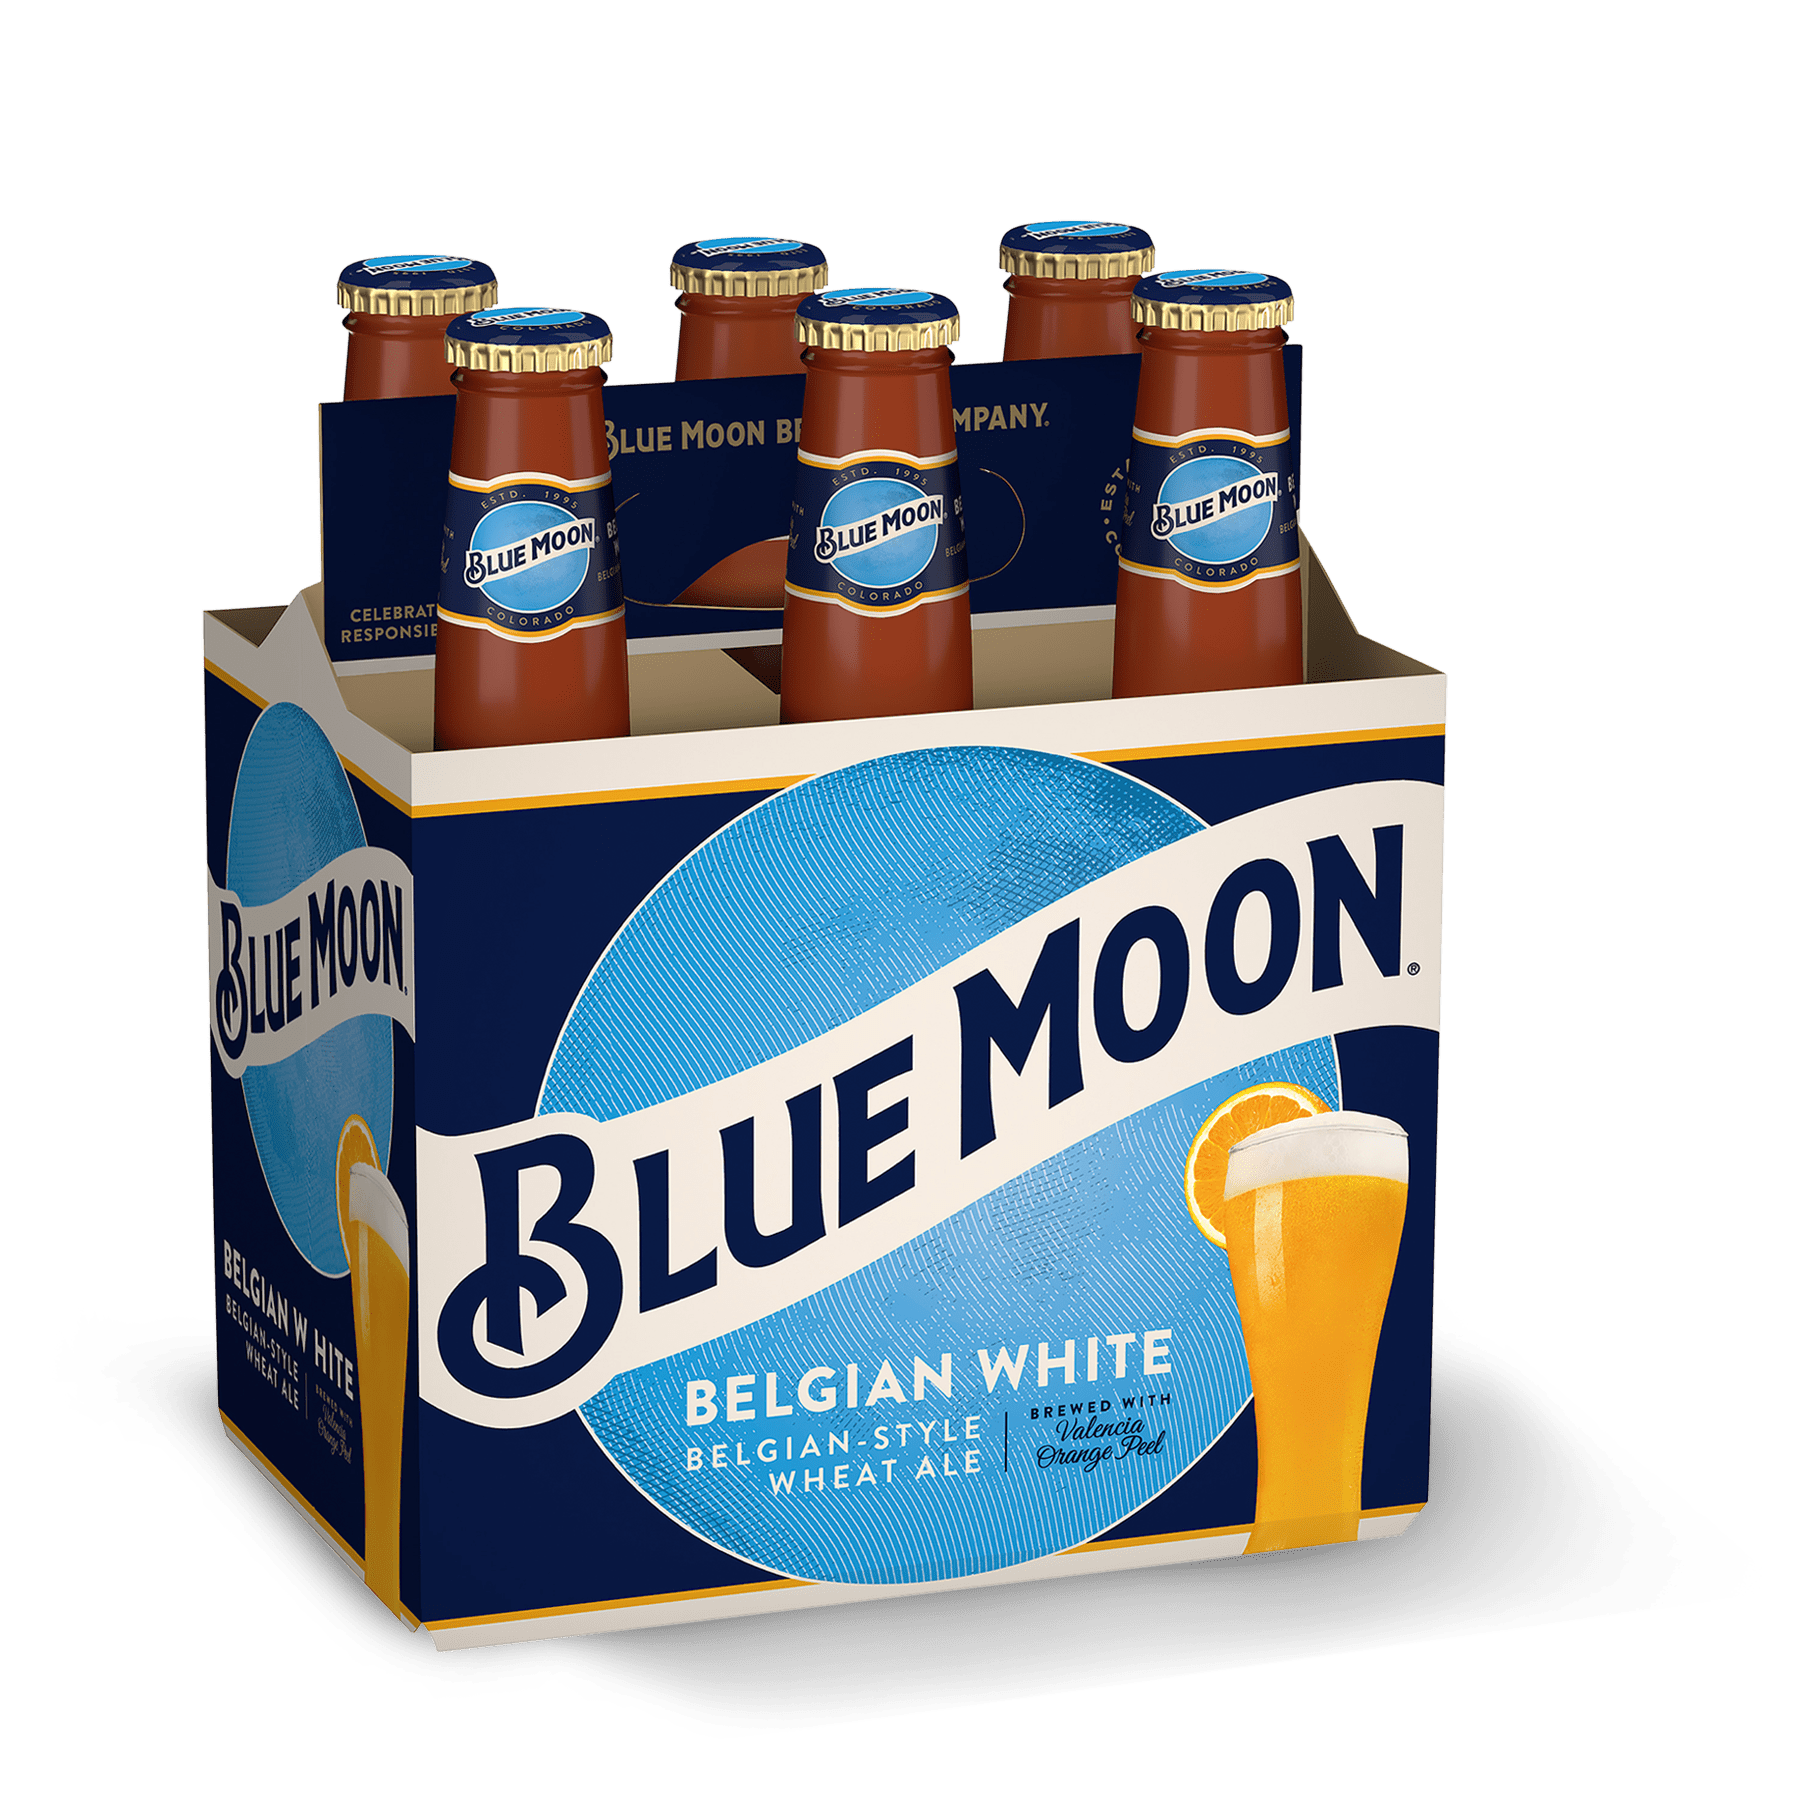 Blue Moon 12 oz, tall Beer Glass